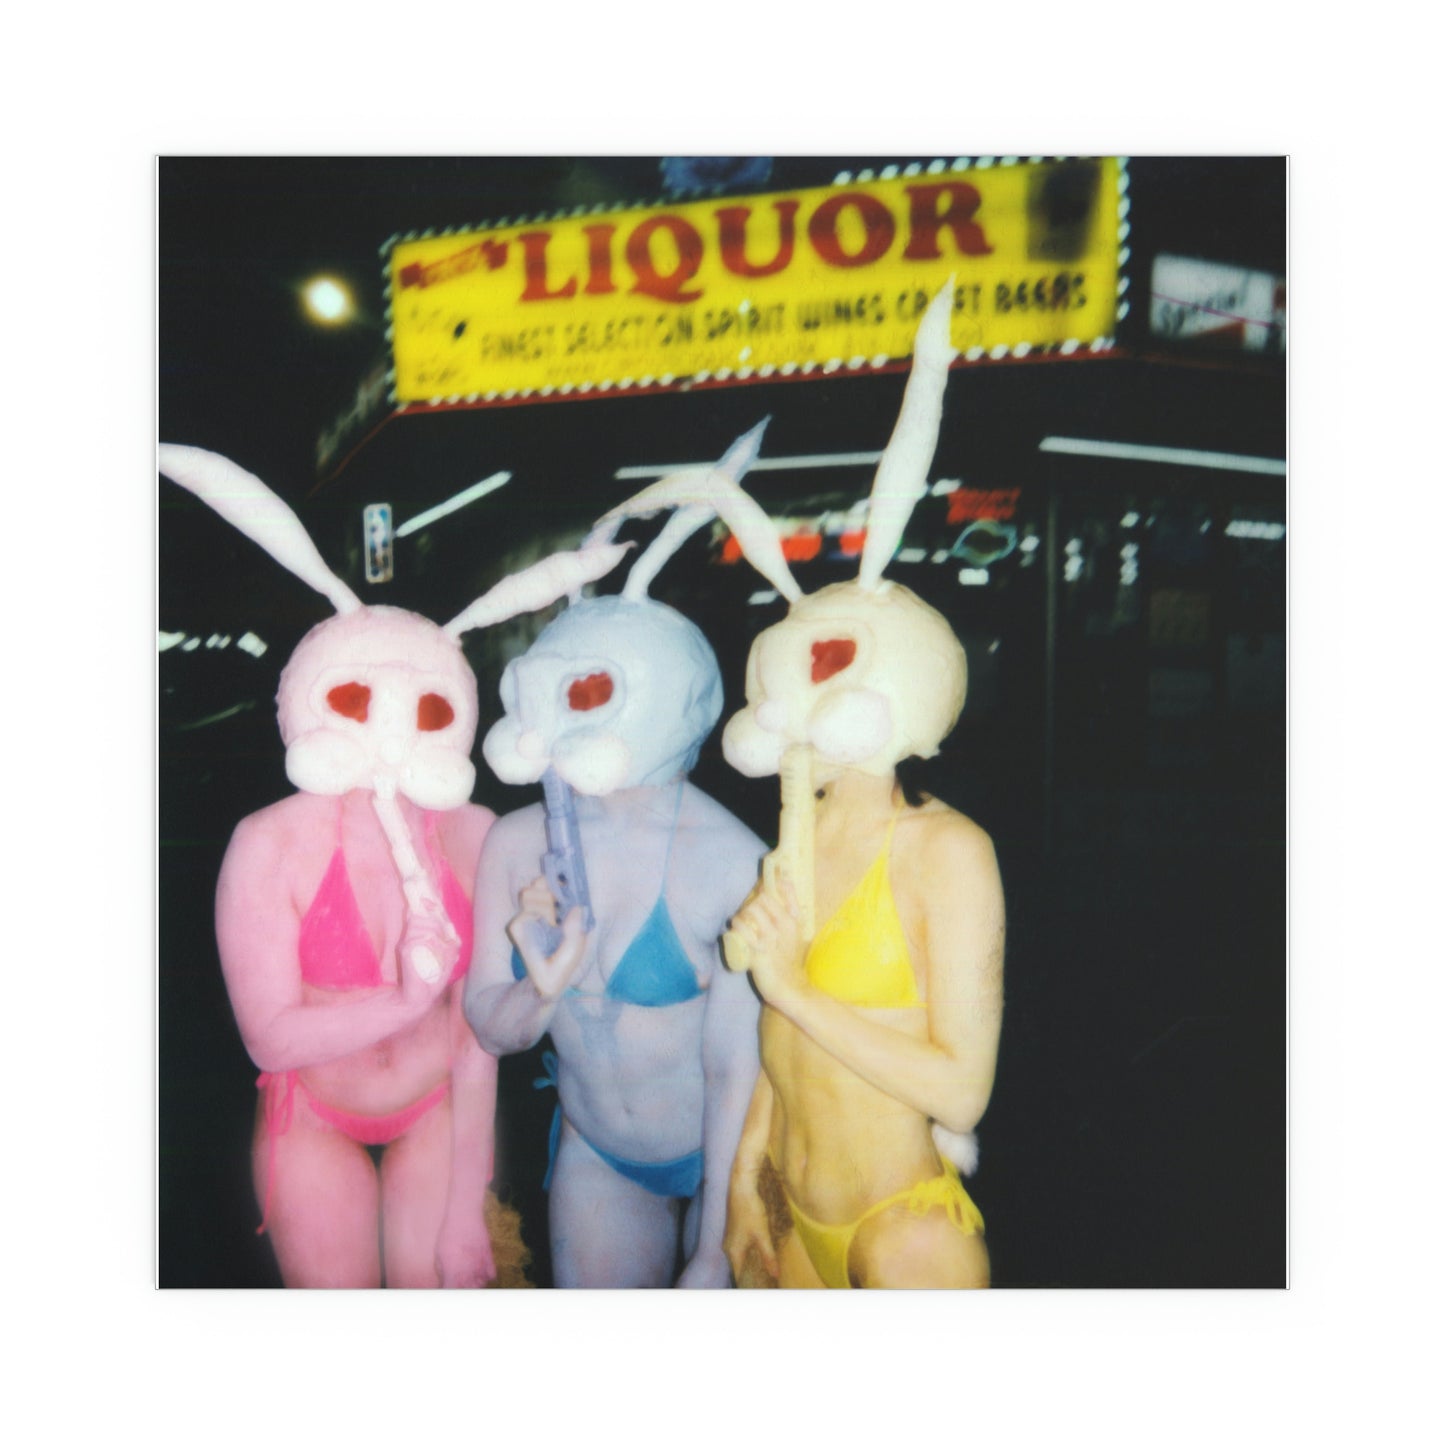 Circius Liquor Bunny girl poster